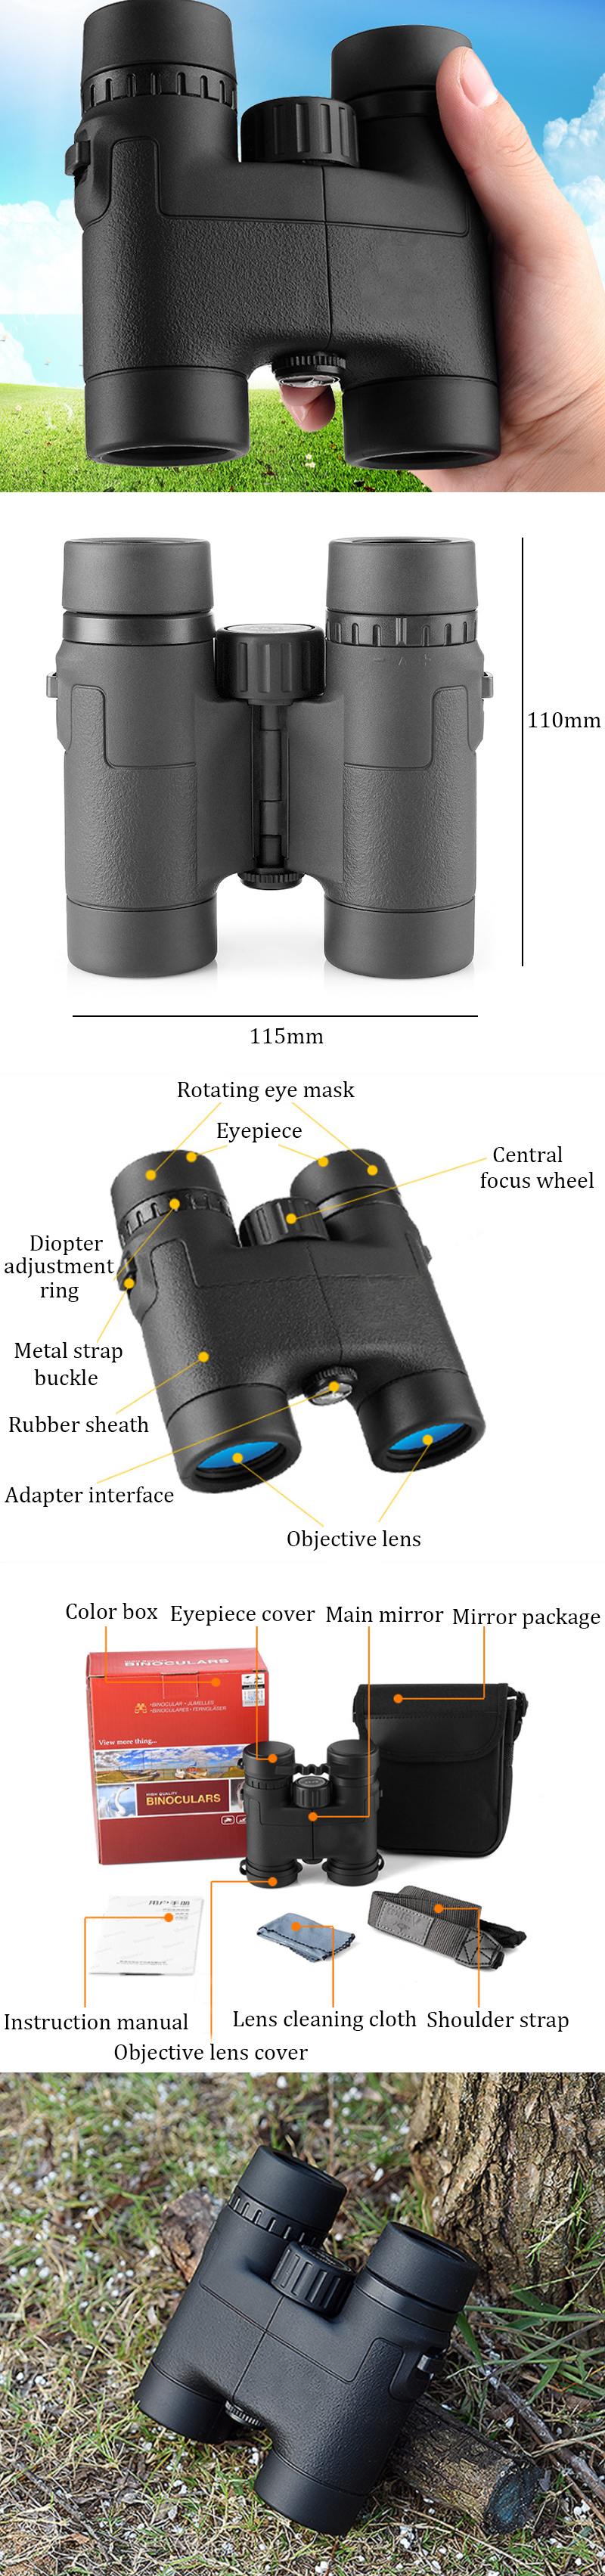 IPReereg-8x32-Outdoor-Portable-Handheld-Binoculars-HD-Day-Night-Vision-Telescope-128m1000m-Camping-T-1412181-1